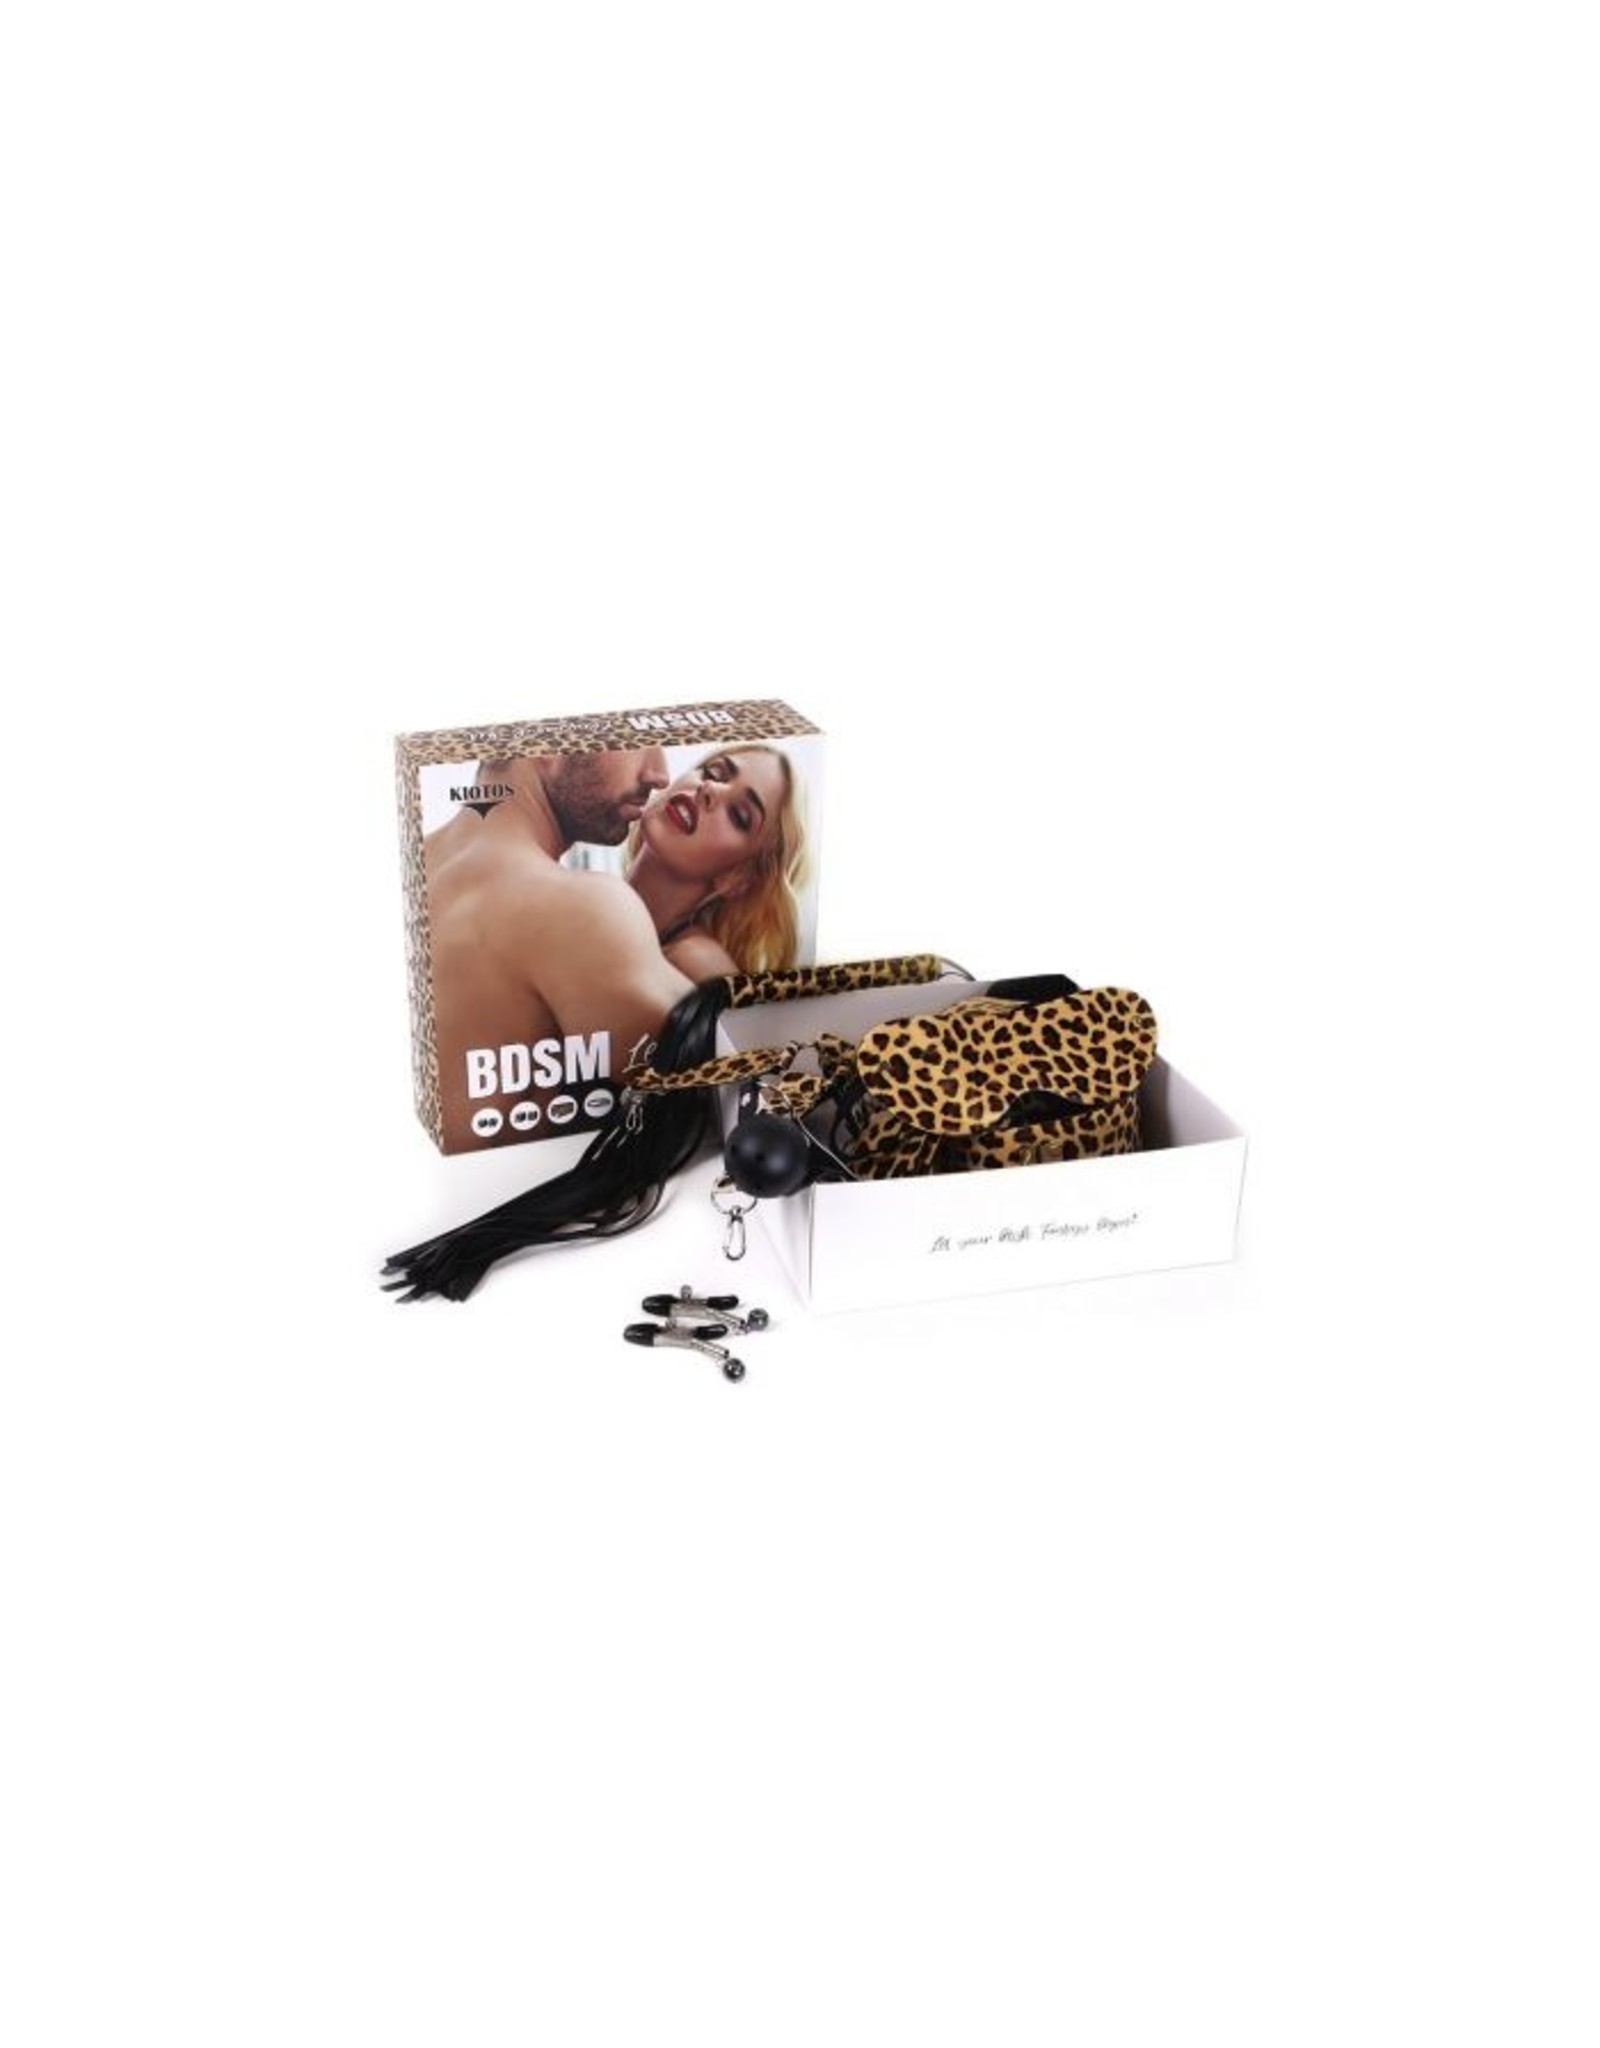 Kiotos BDSM Leopard Kit